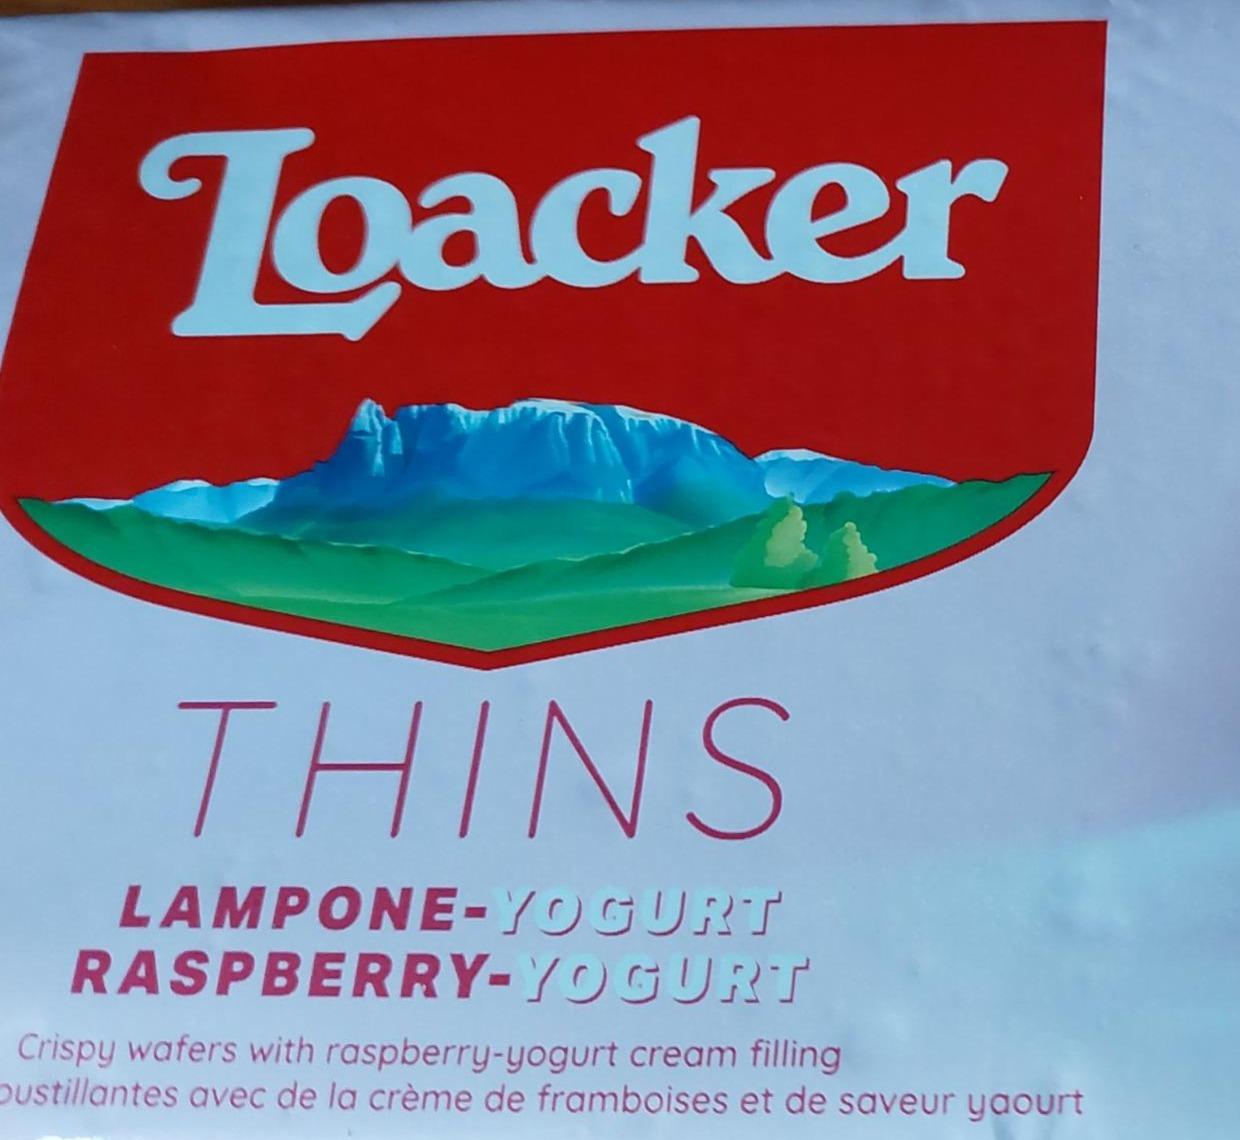 Fotografie - Thins rassberry-yogurt Loacker